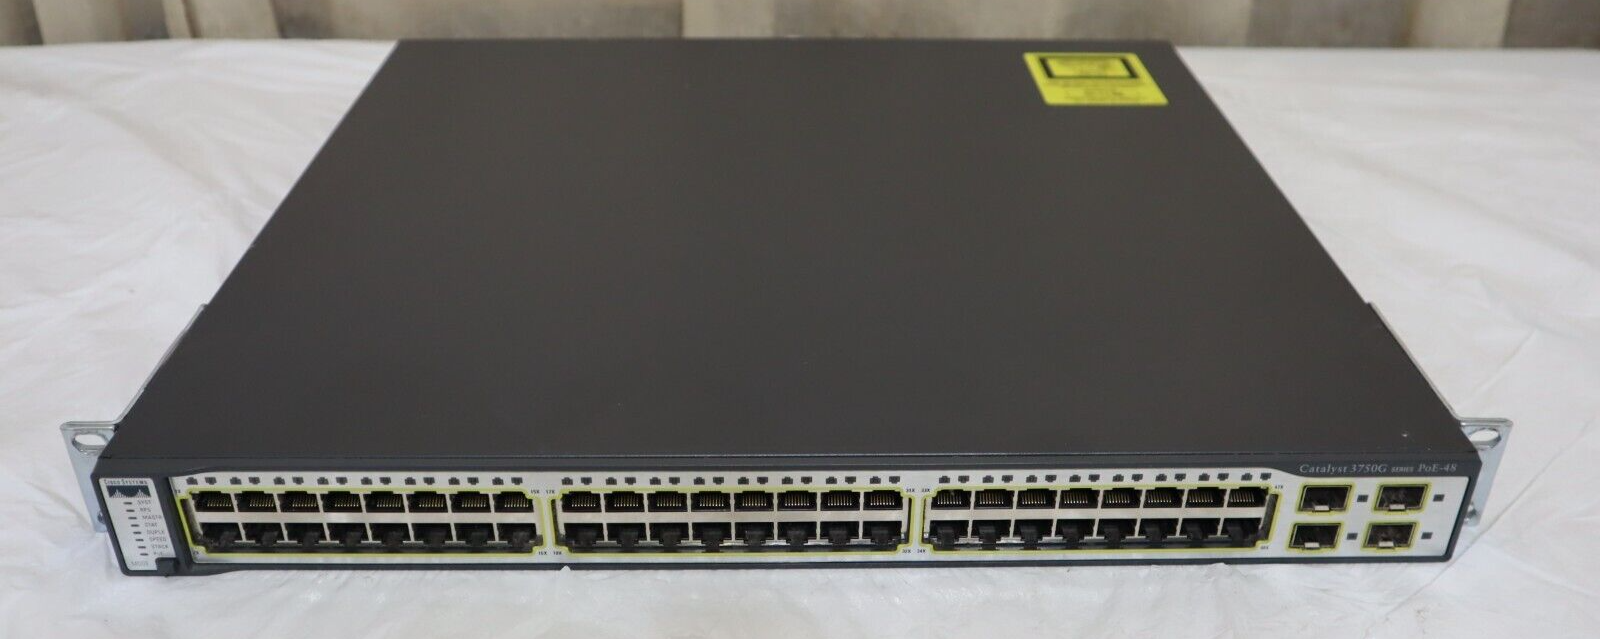 Cisco Catalyst (WS-C3750G-48PS-S) 48 Ports PoE Gigabit Ethernet Switch - $69.25